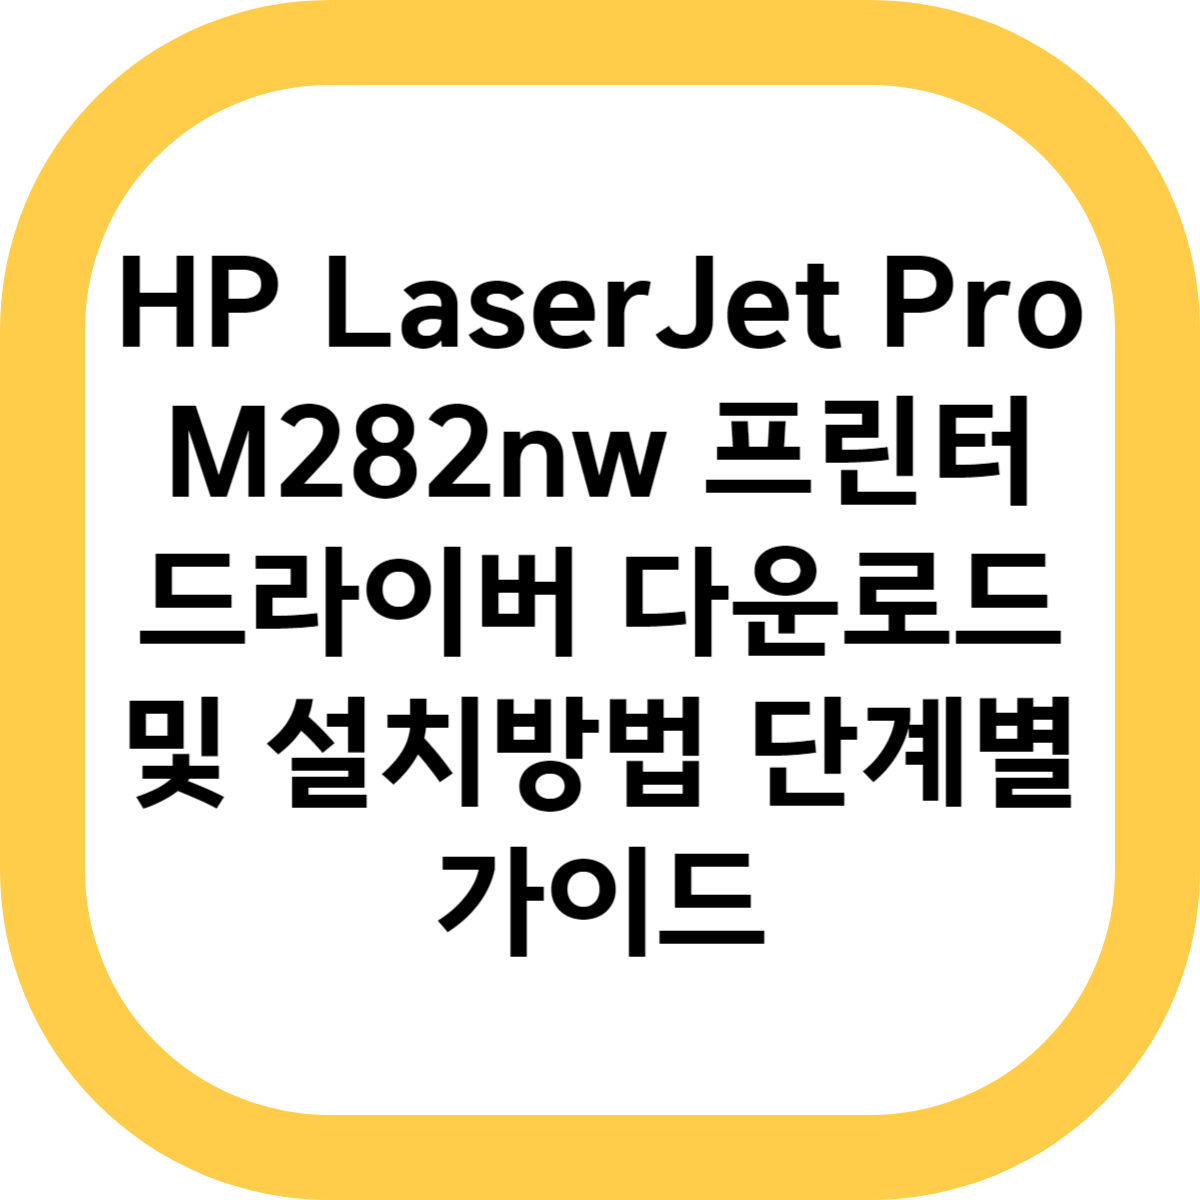 HP LaserJet Pro M282nw 프린터 드라이버 다운로드 및 설치방법 단계별 가이드